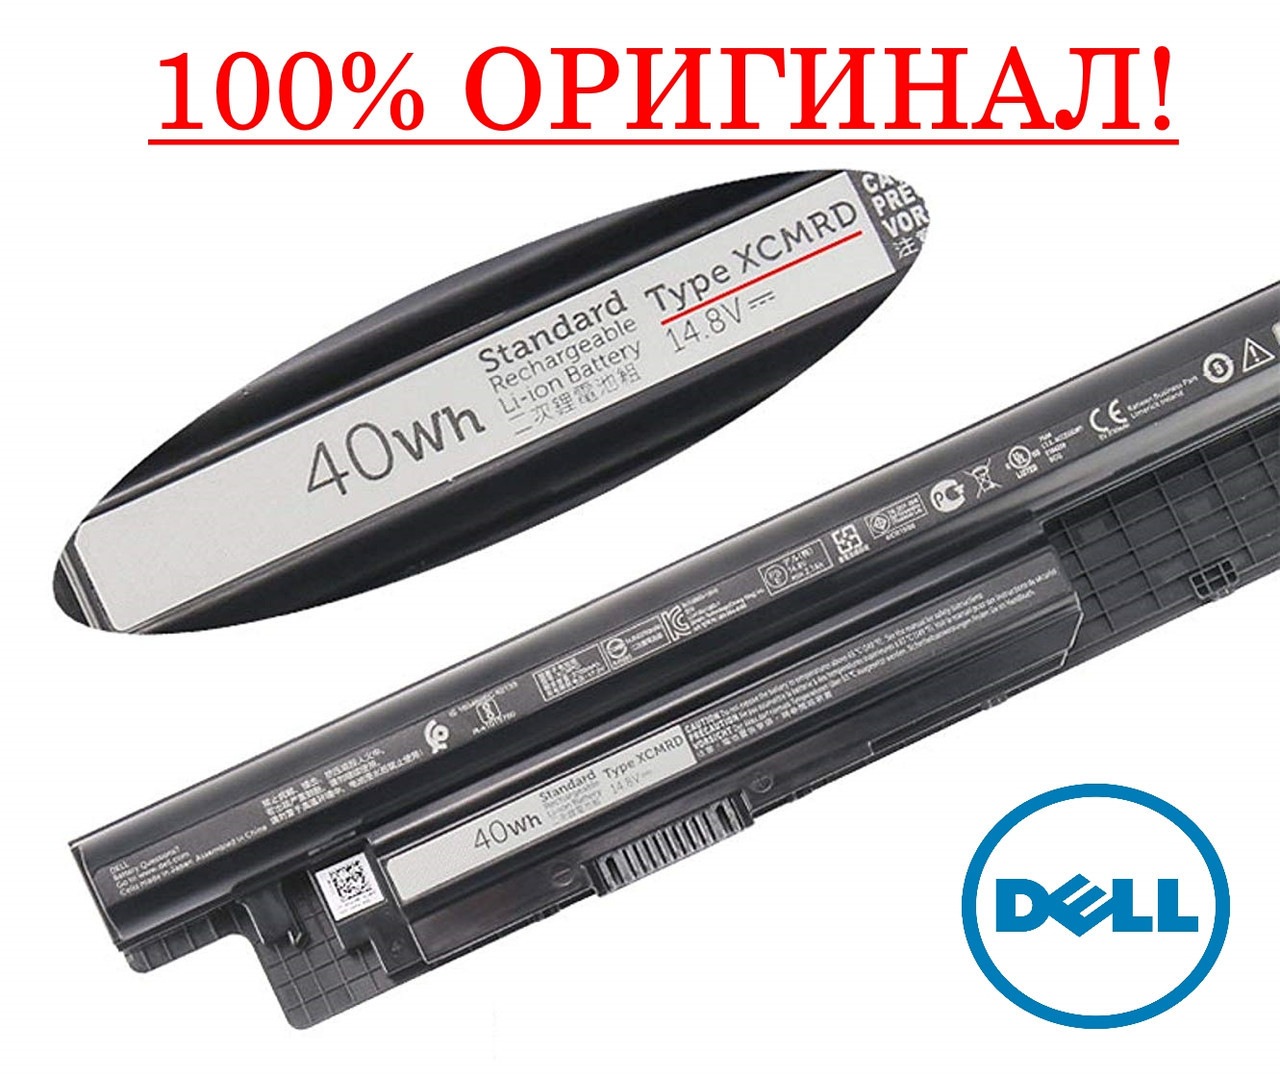 Оригінальна батарея для ноутбука Dell Inspiron 5521, 5535, 5537 - XCMRD, 14.8 V 2630mAh - Акумулятор, АКБ